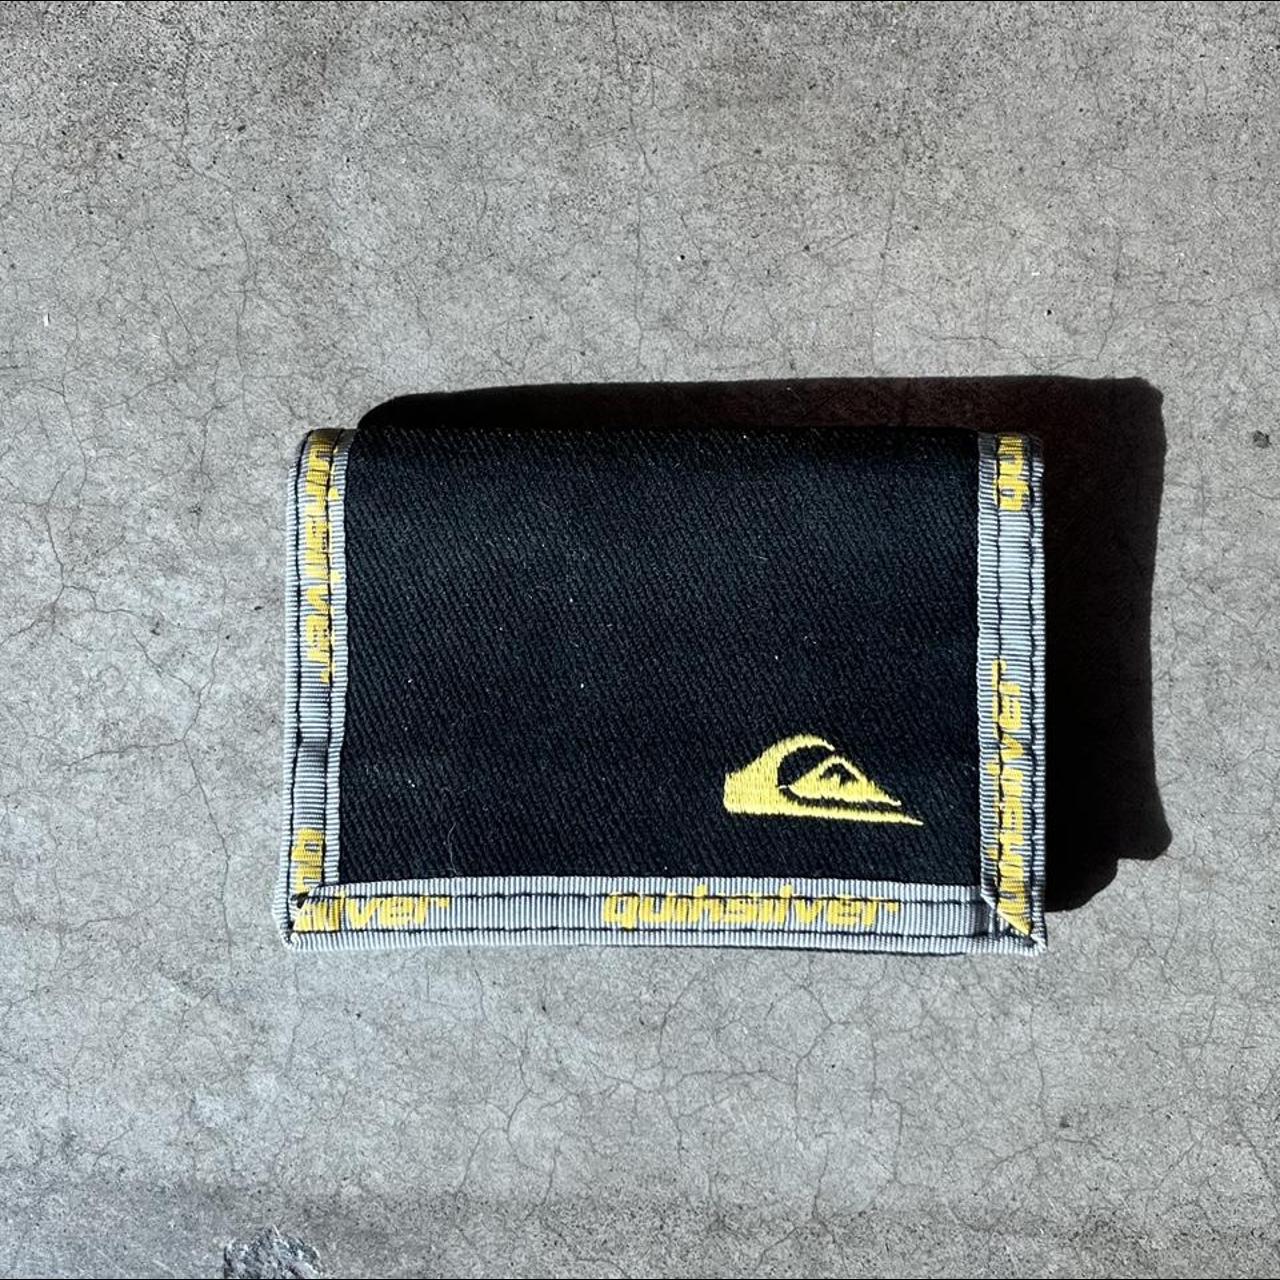 Quiksilver Men's Black and Yellow Wallet-purses